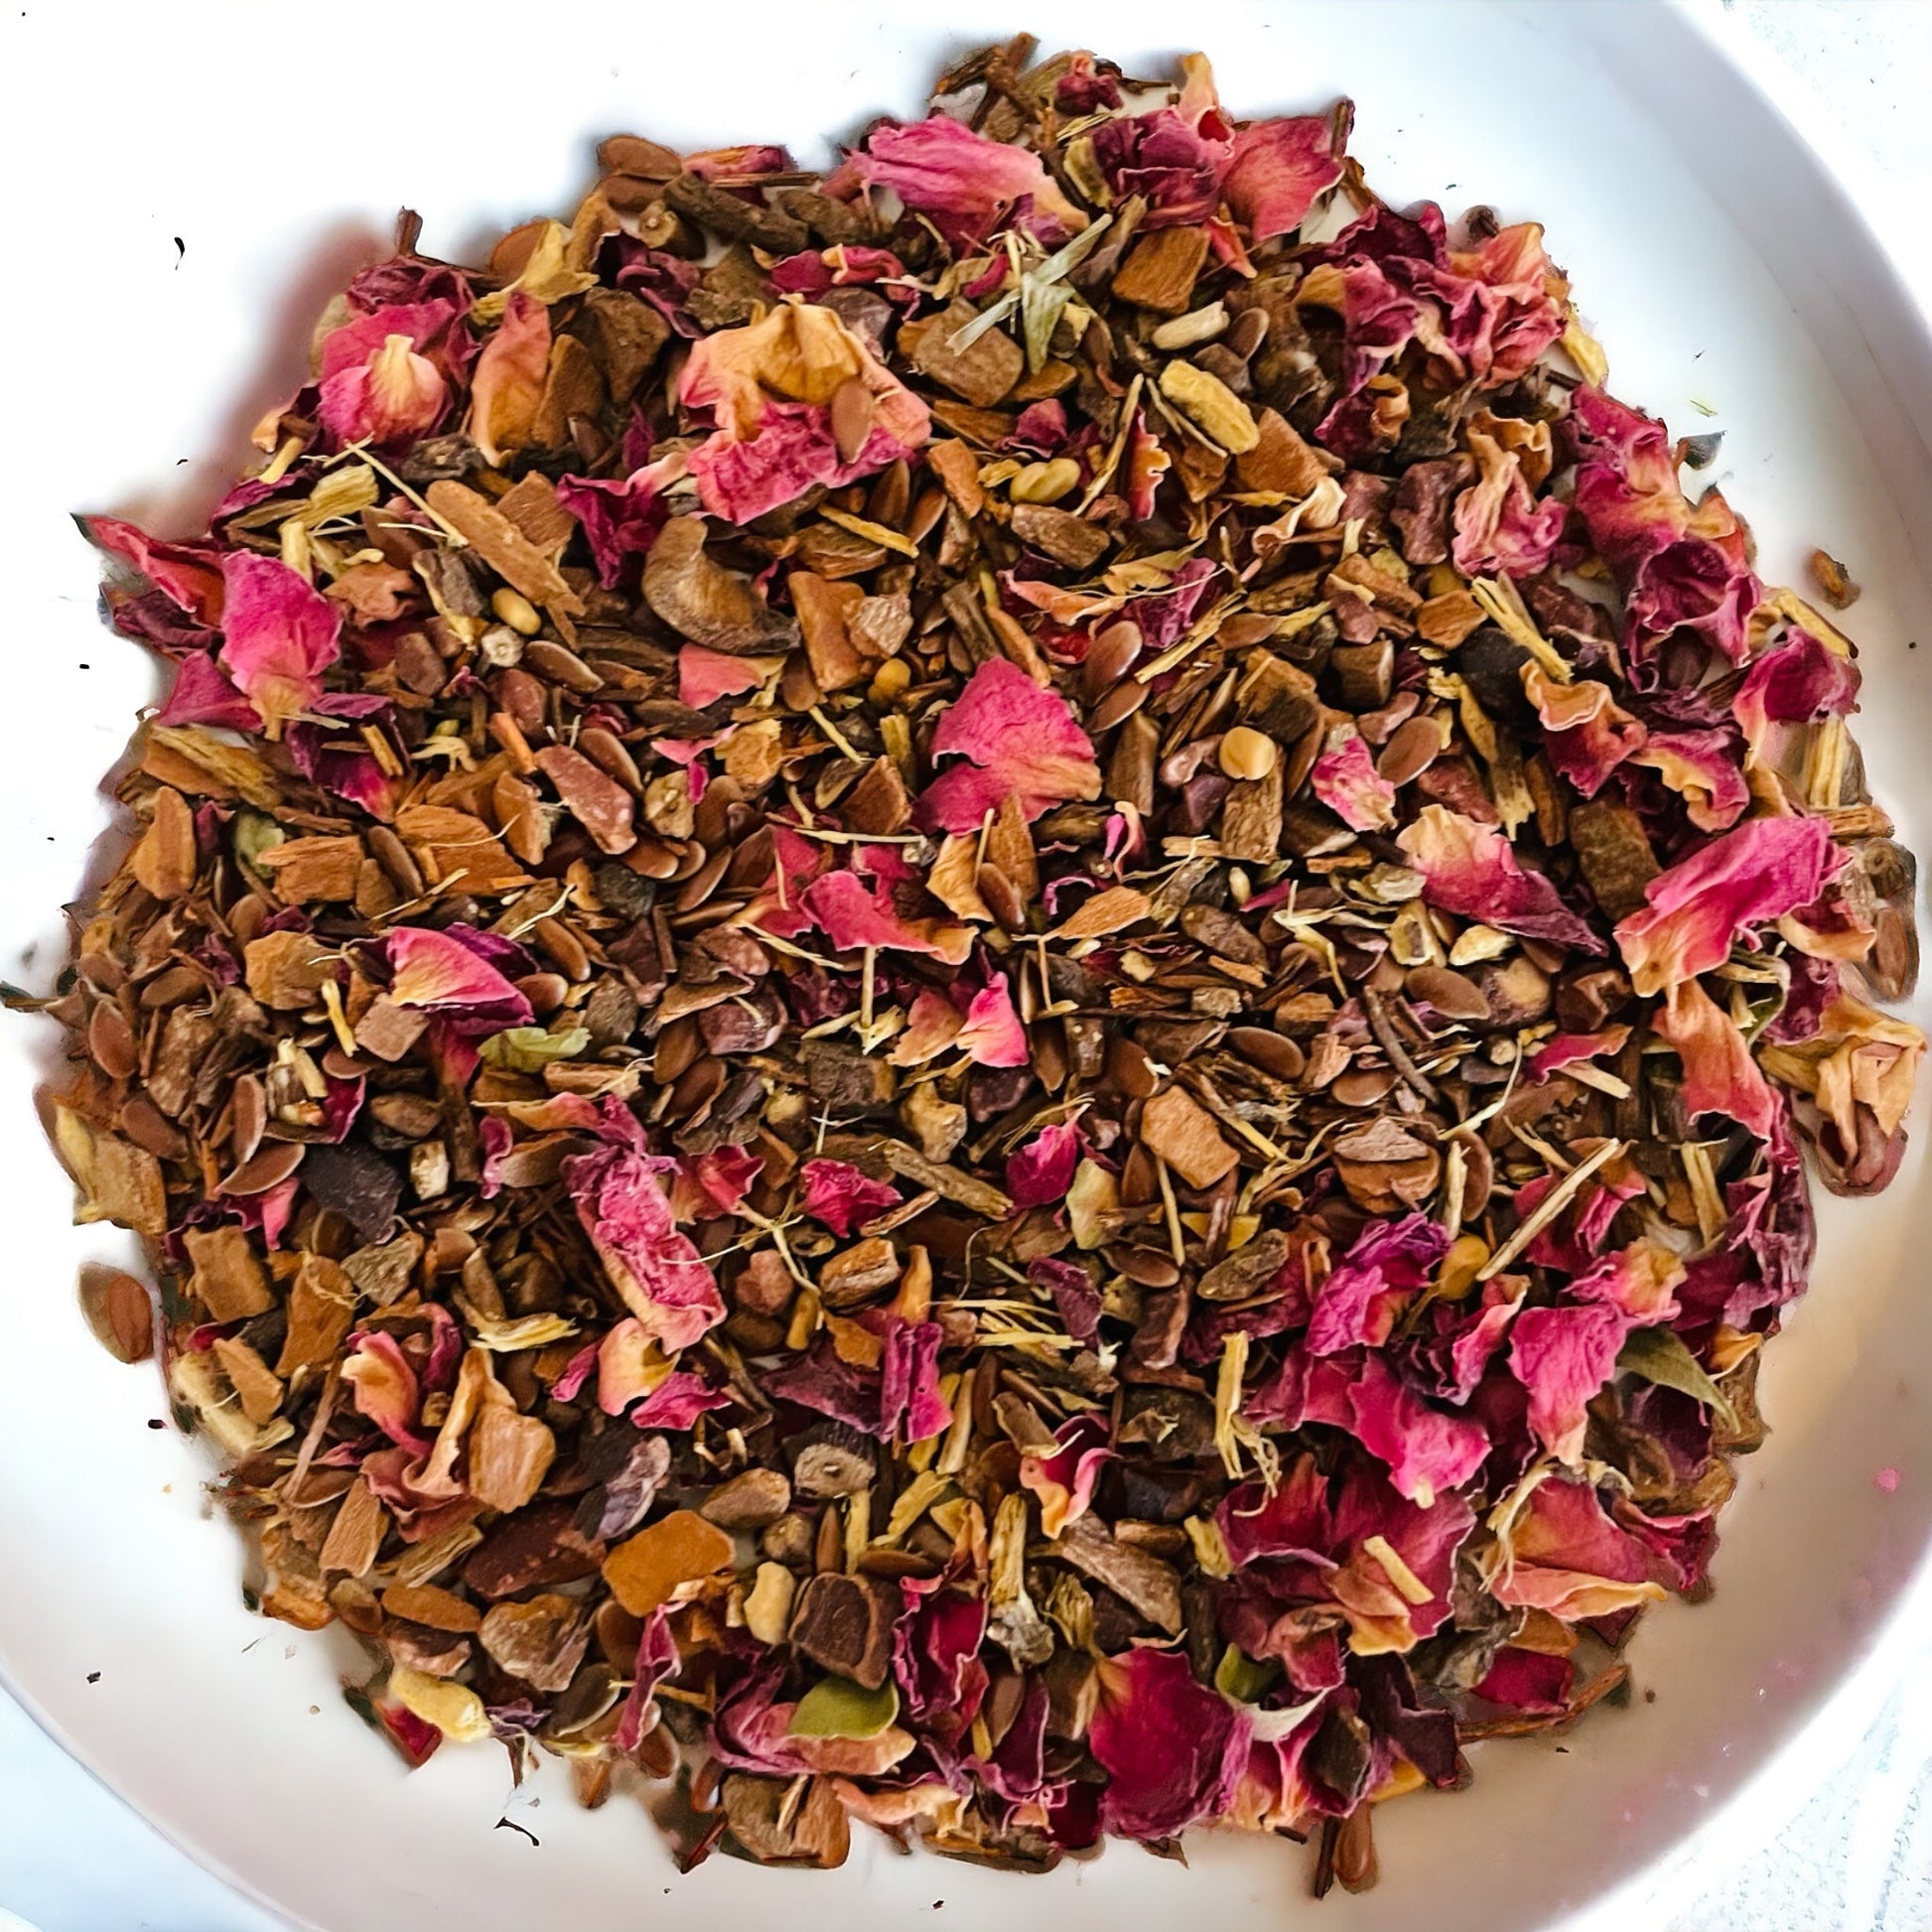 Natirally organic dried detox tea of colourfull herbs on a white plate